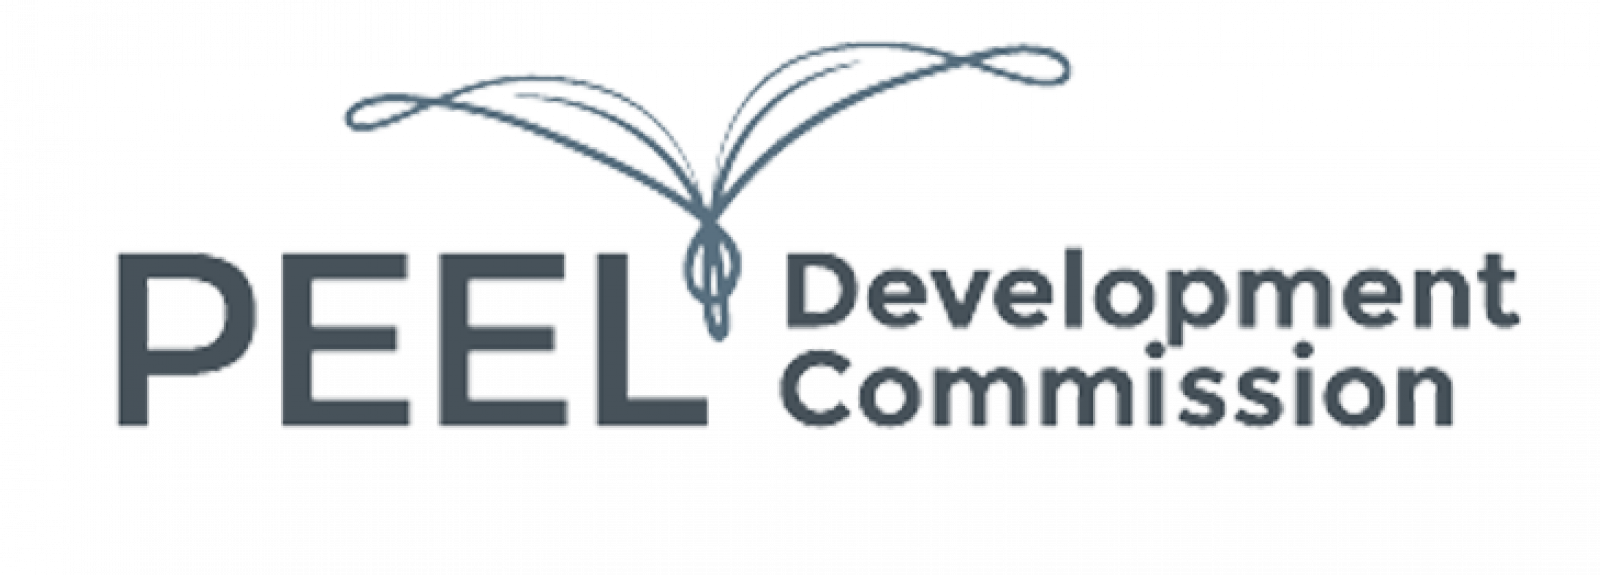 Peel Development Commission